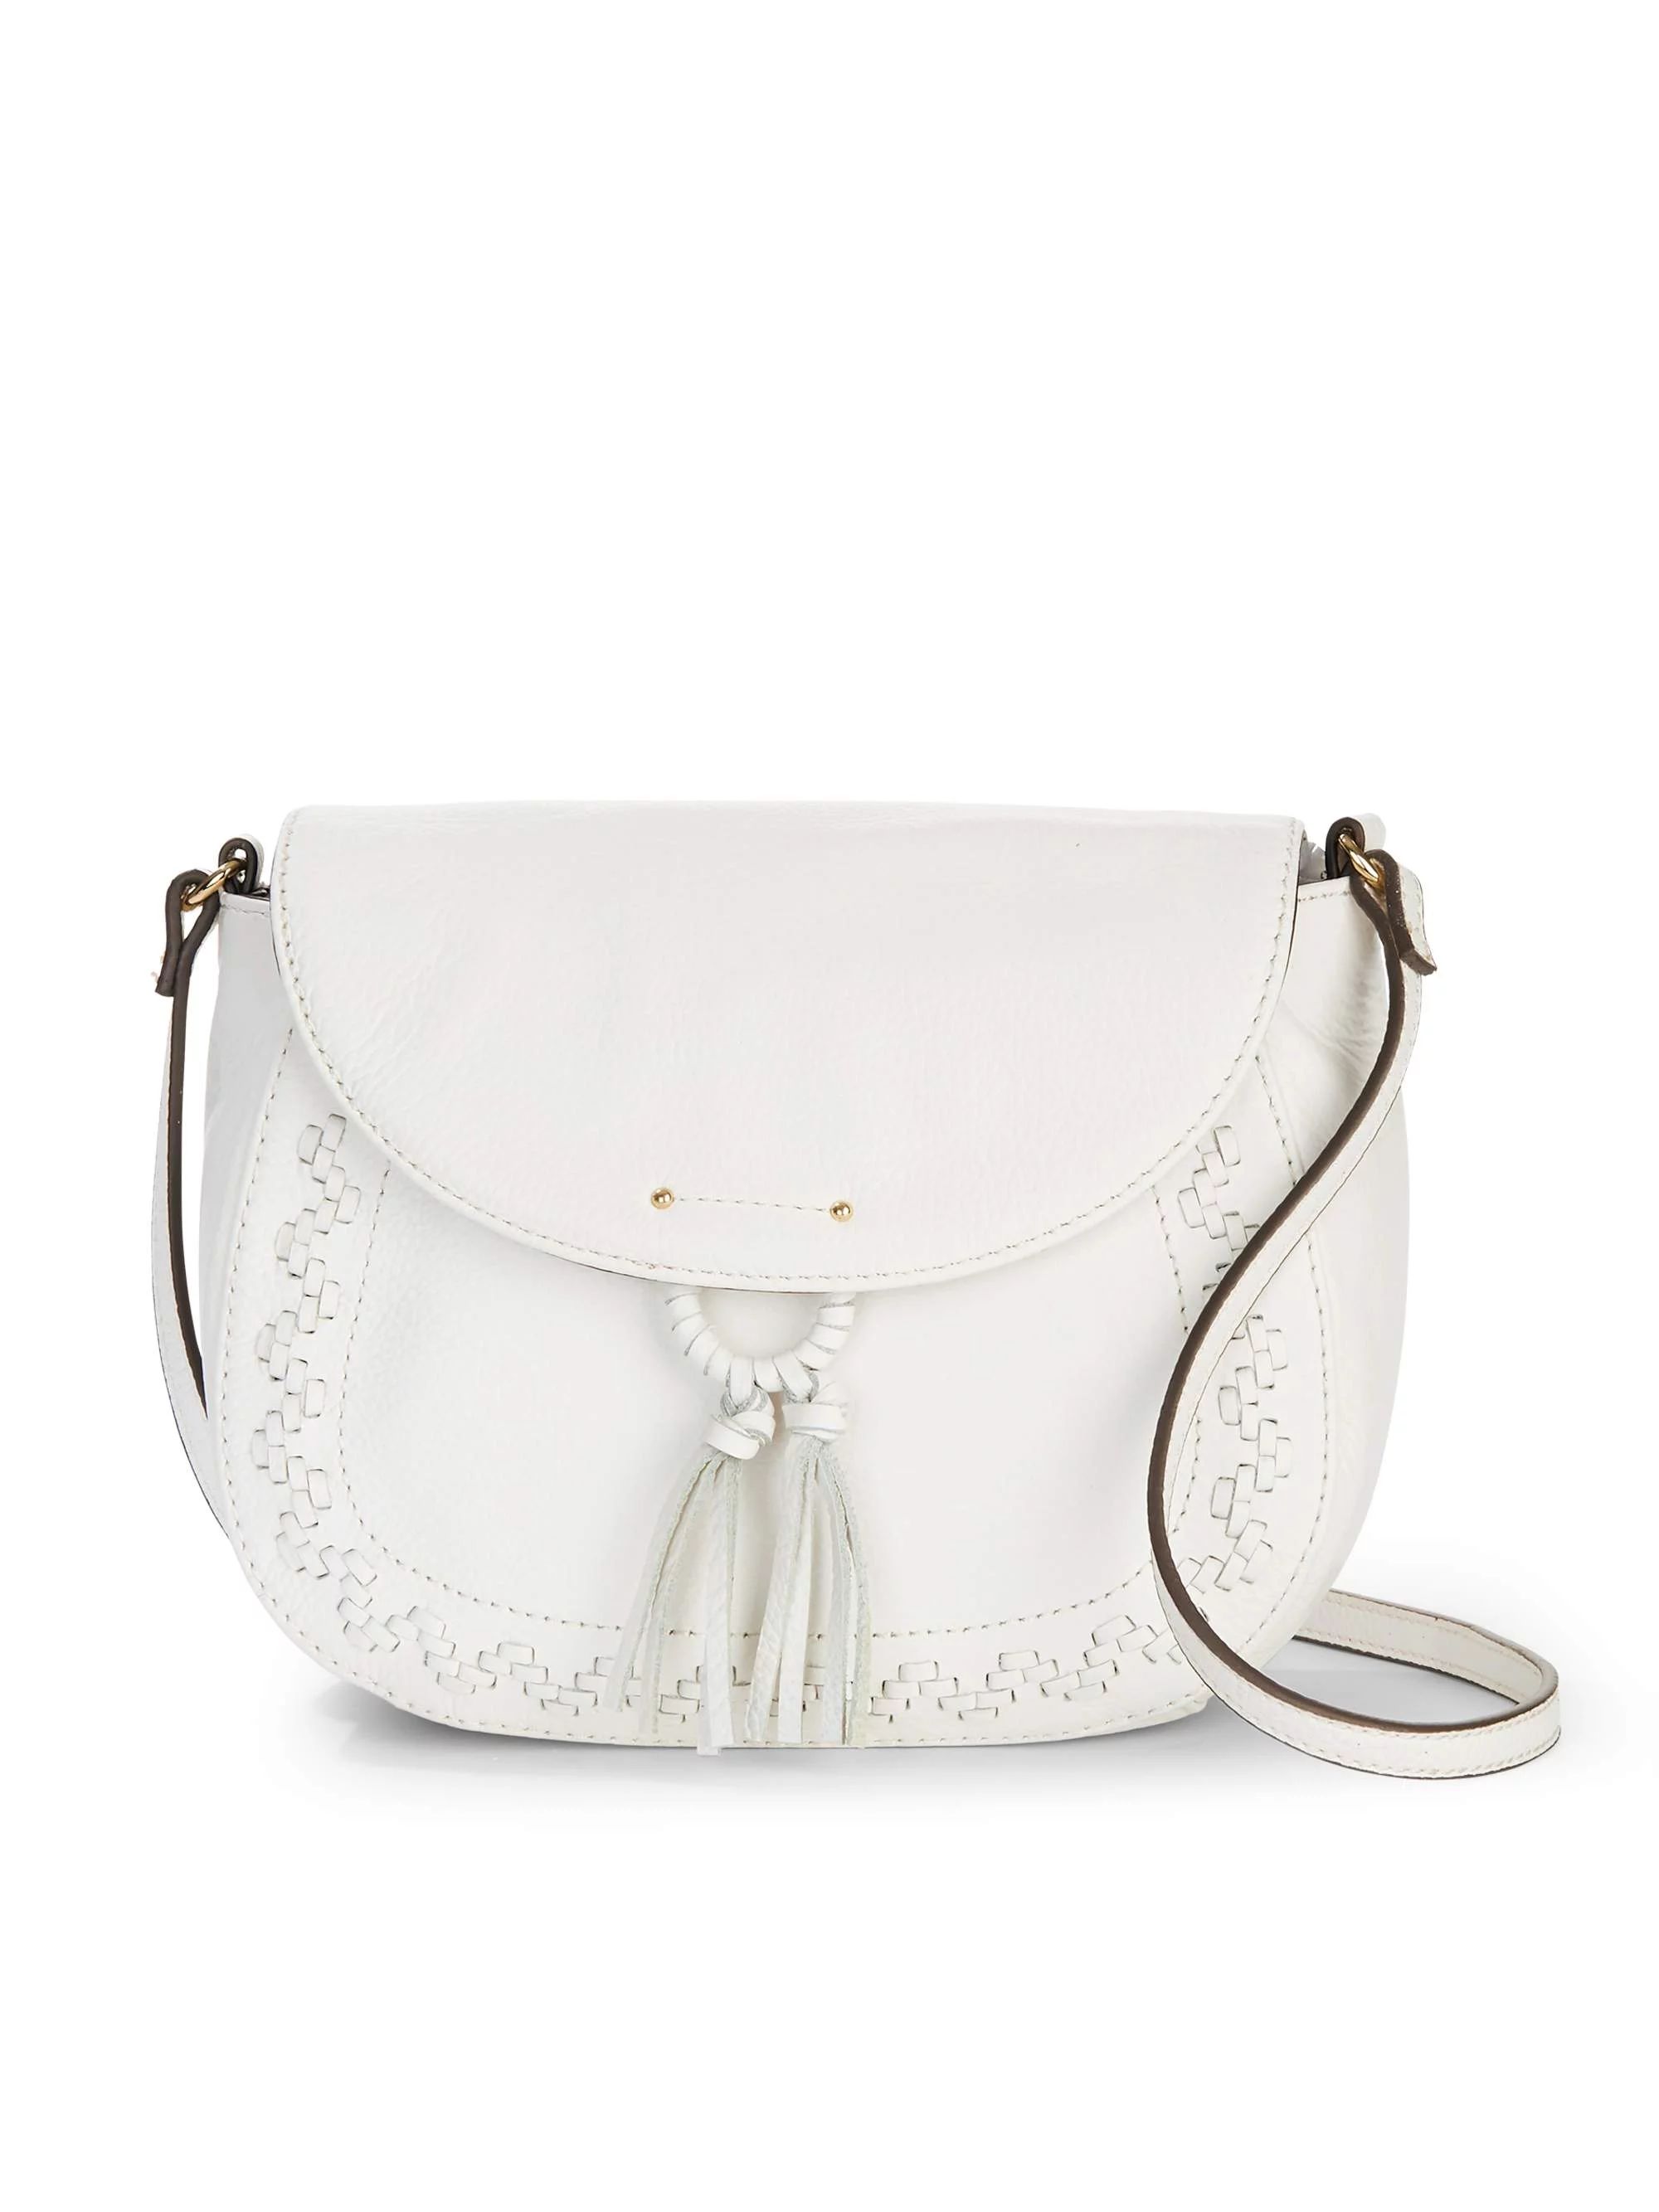 Tignanello Pebble Leather Saddle Crossbody Handbag- Lillie | Walmart (US)